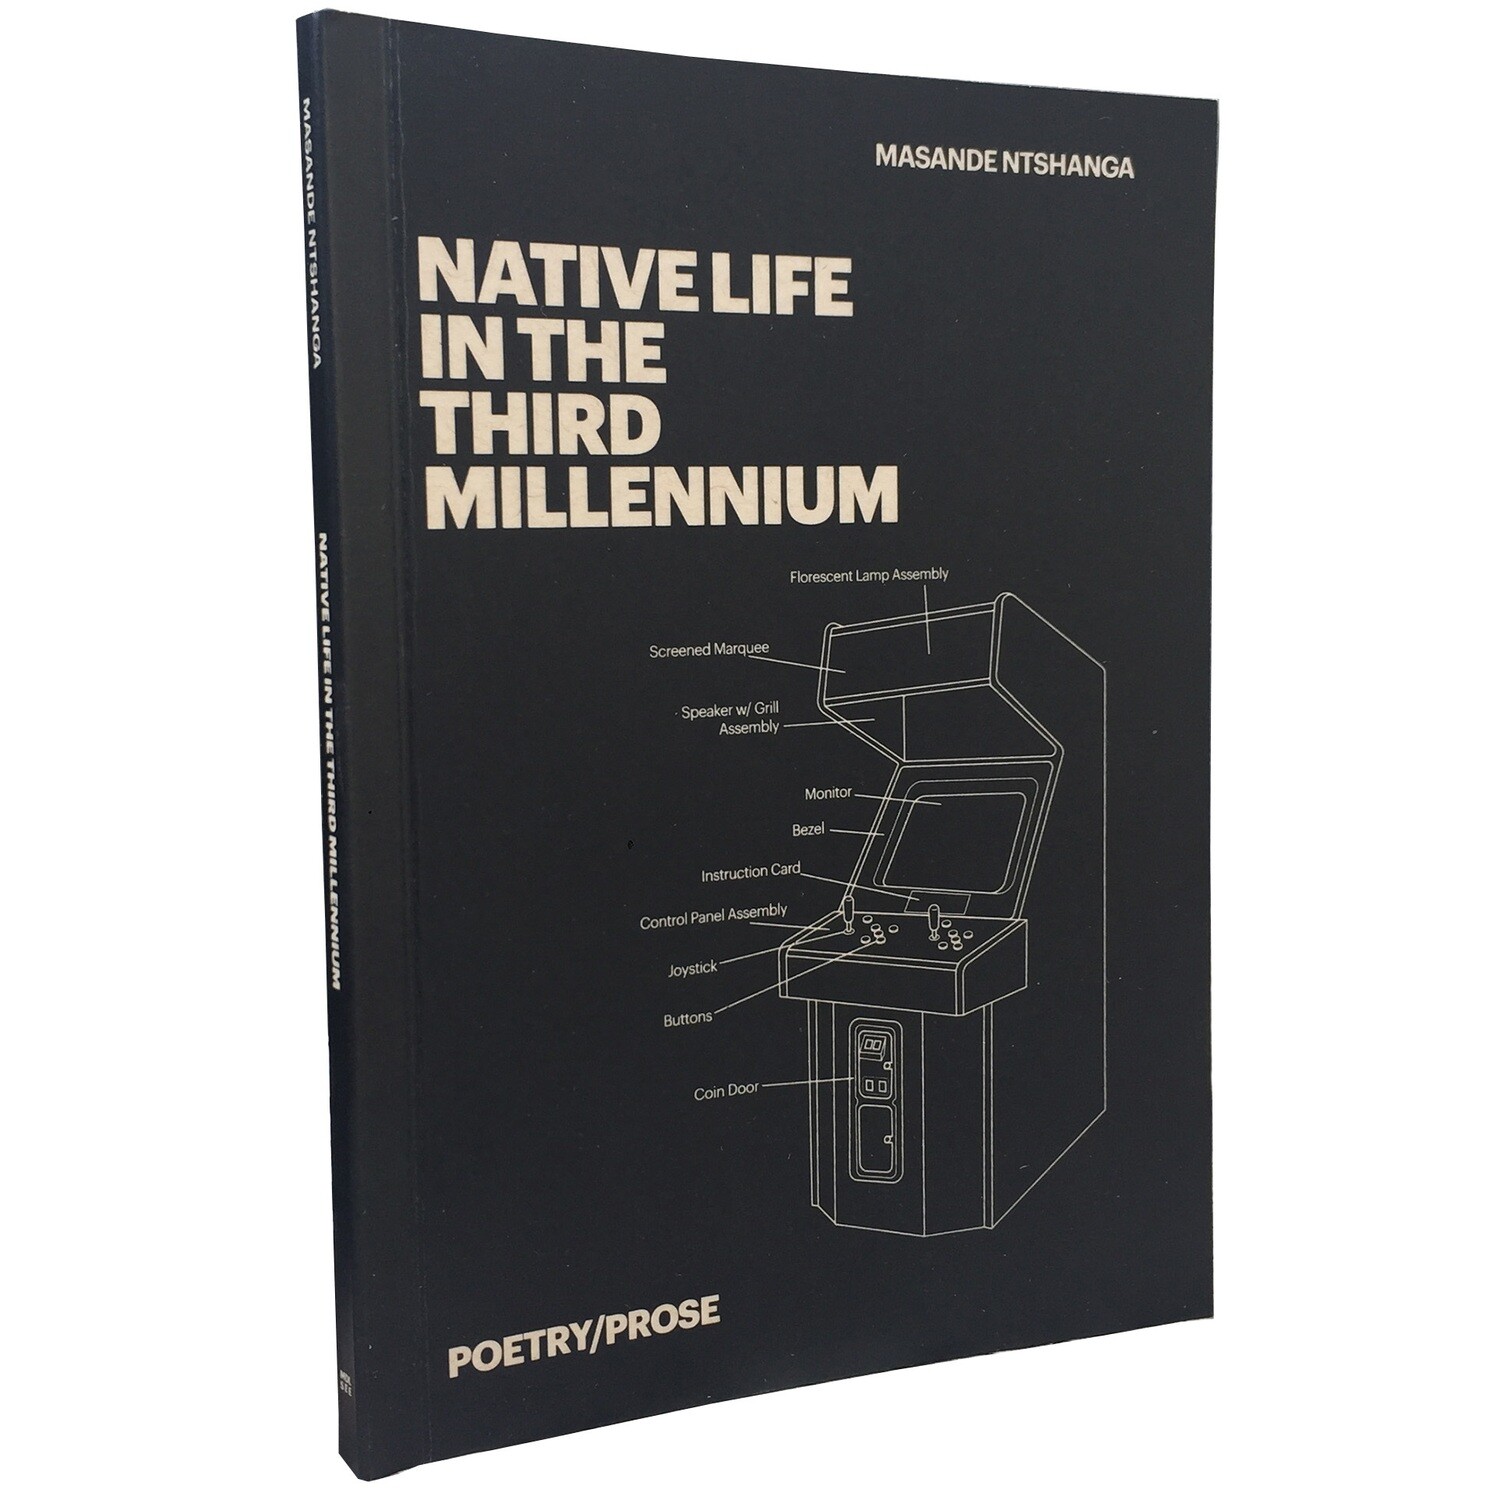 Native Life in the Third Millennium by Masande Ntshanga (Model See Media, 2020)